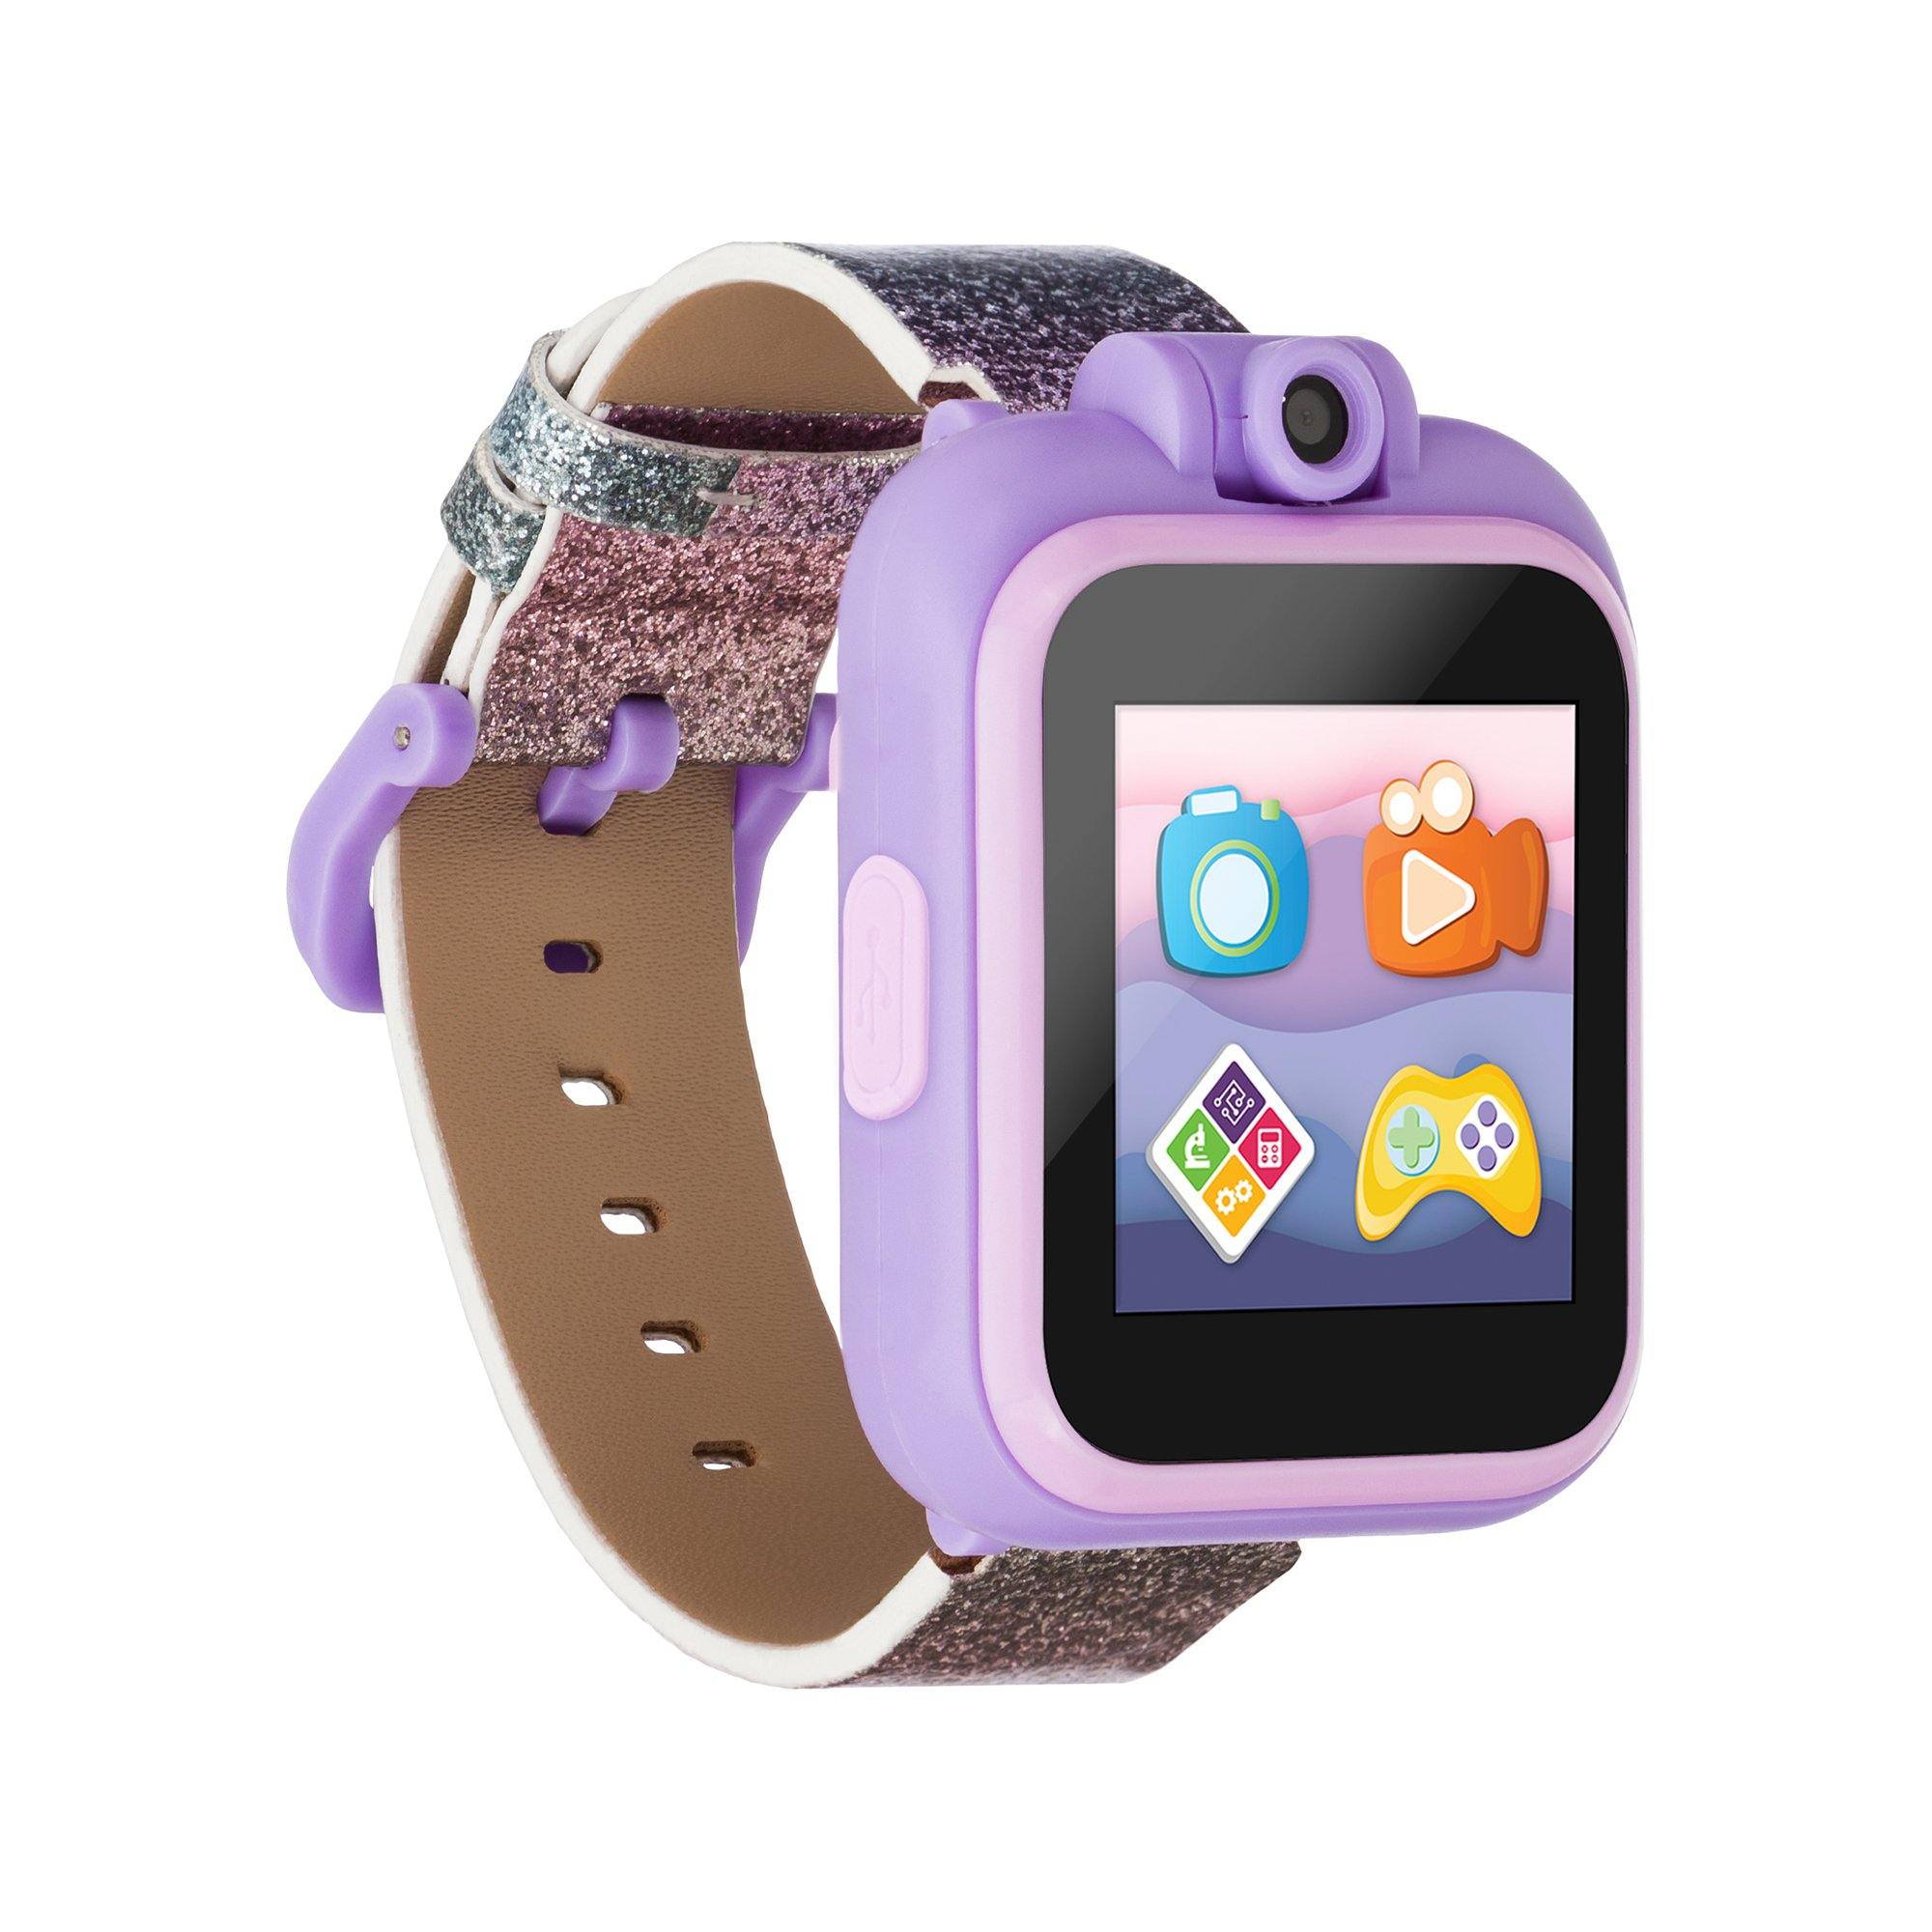 PlayZoom 2 Kids Smartwatch: Pink/Purple Glitter affordable smart watch